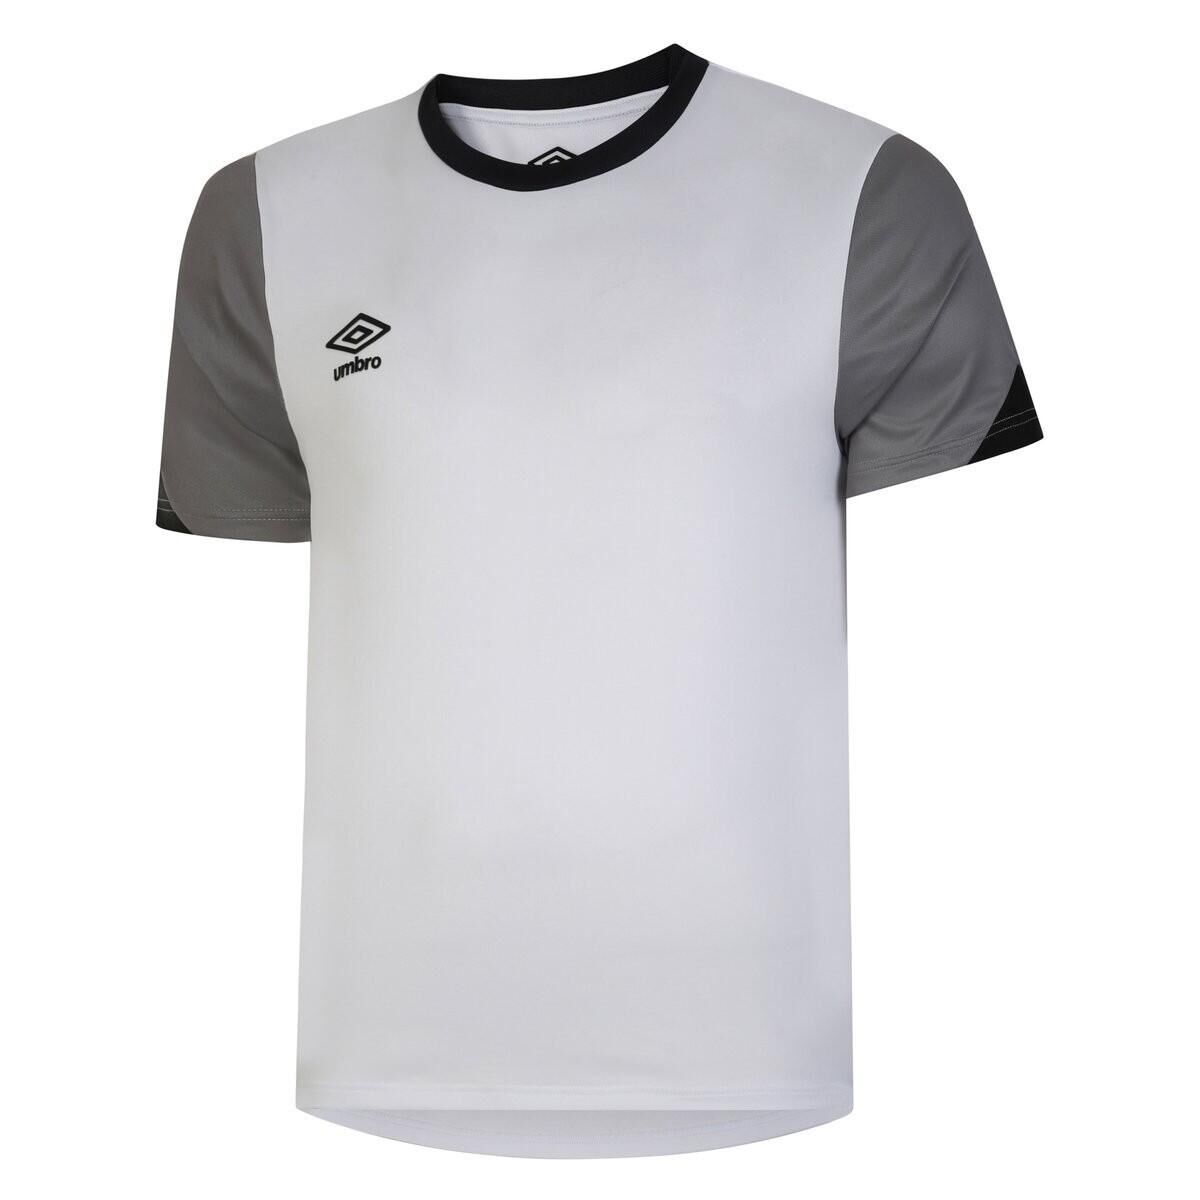 UMBRO Mens Total Training Jersey (Black/White/Carbon)